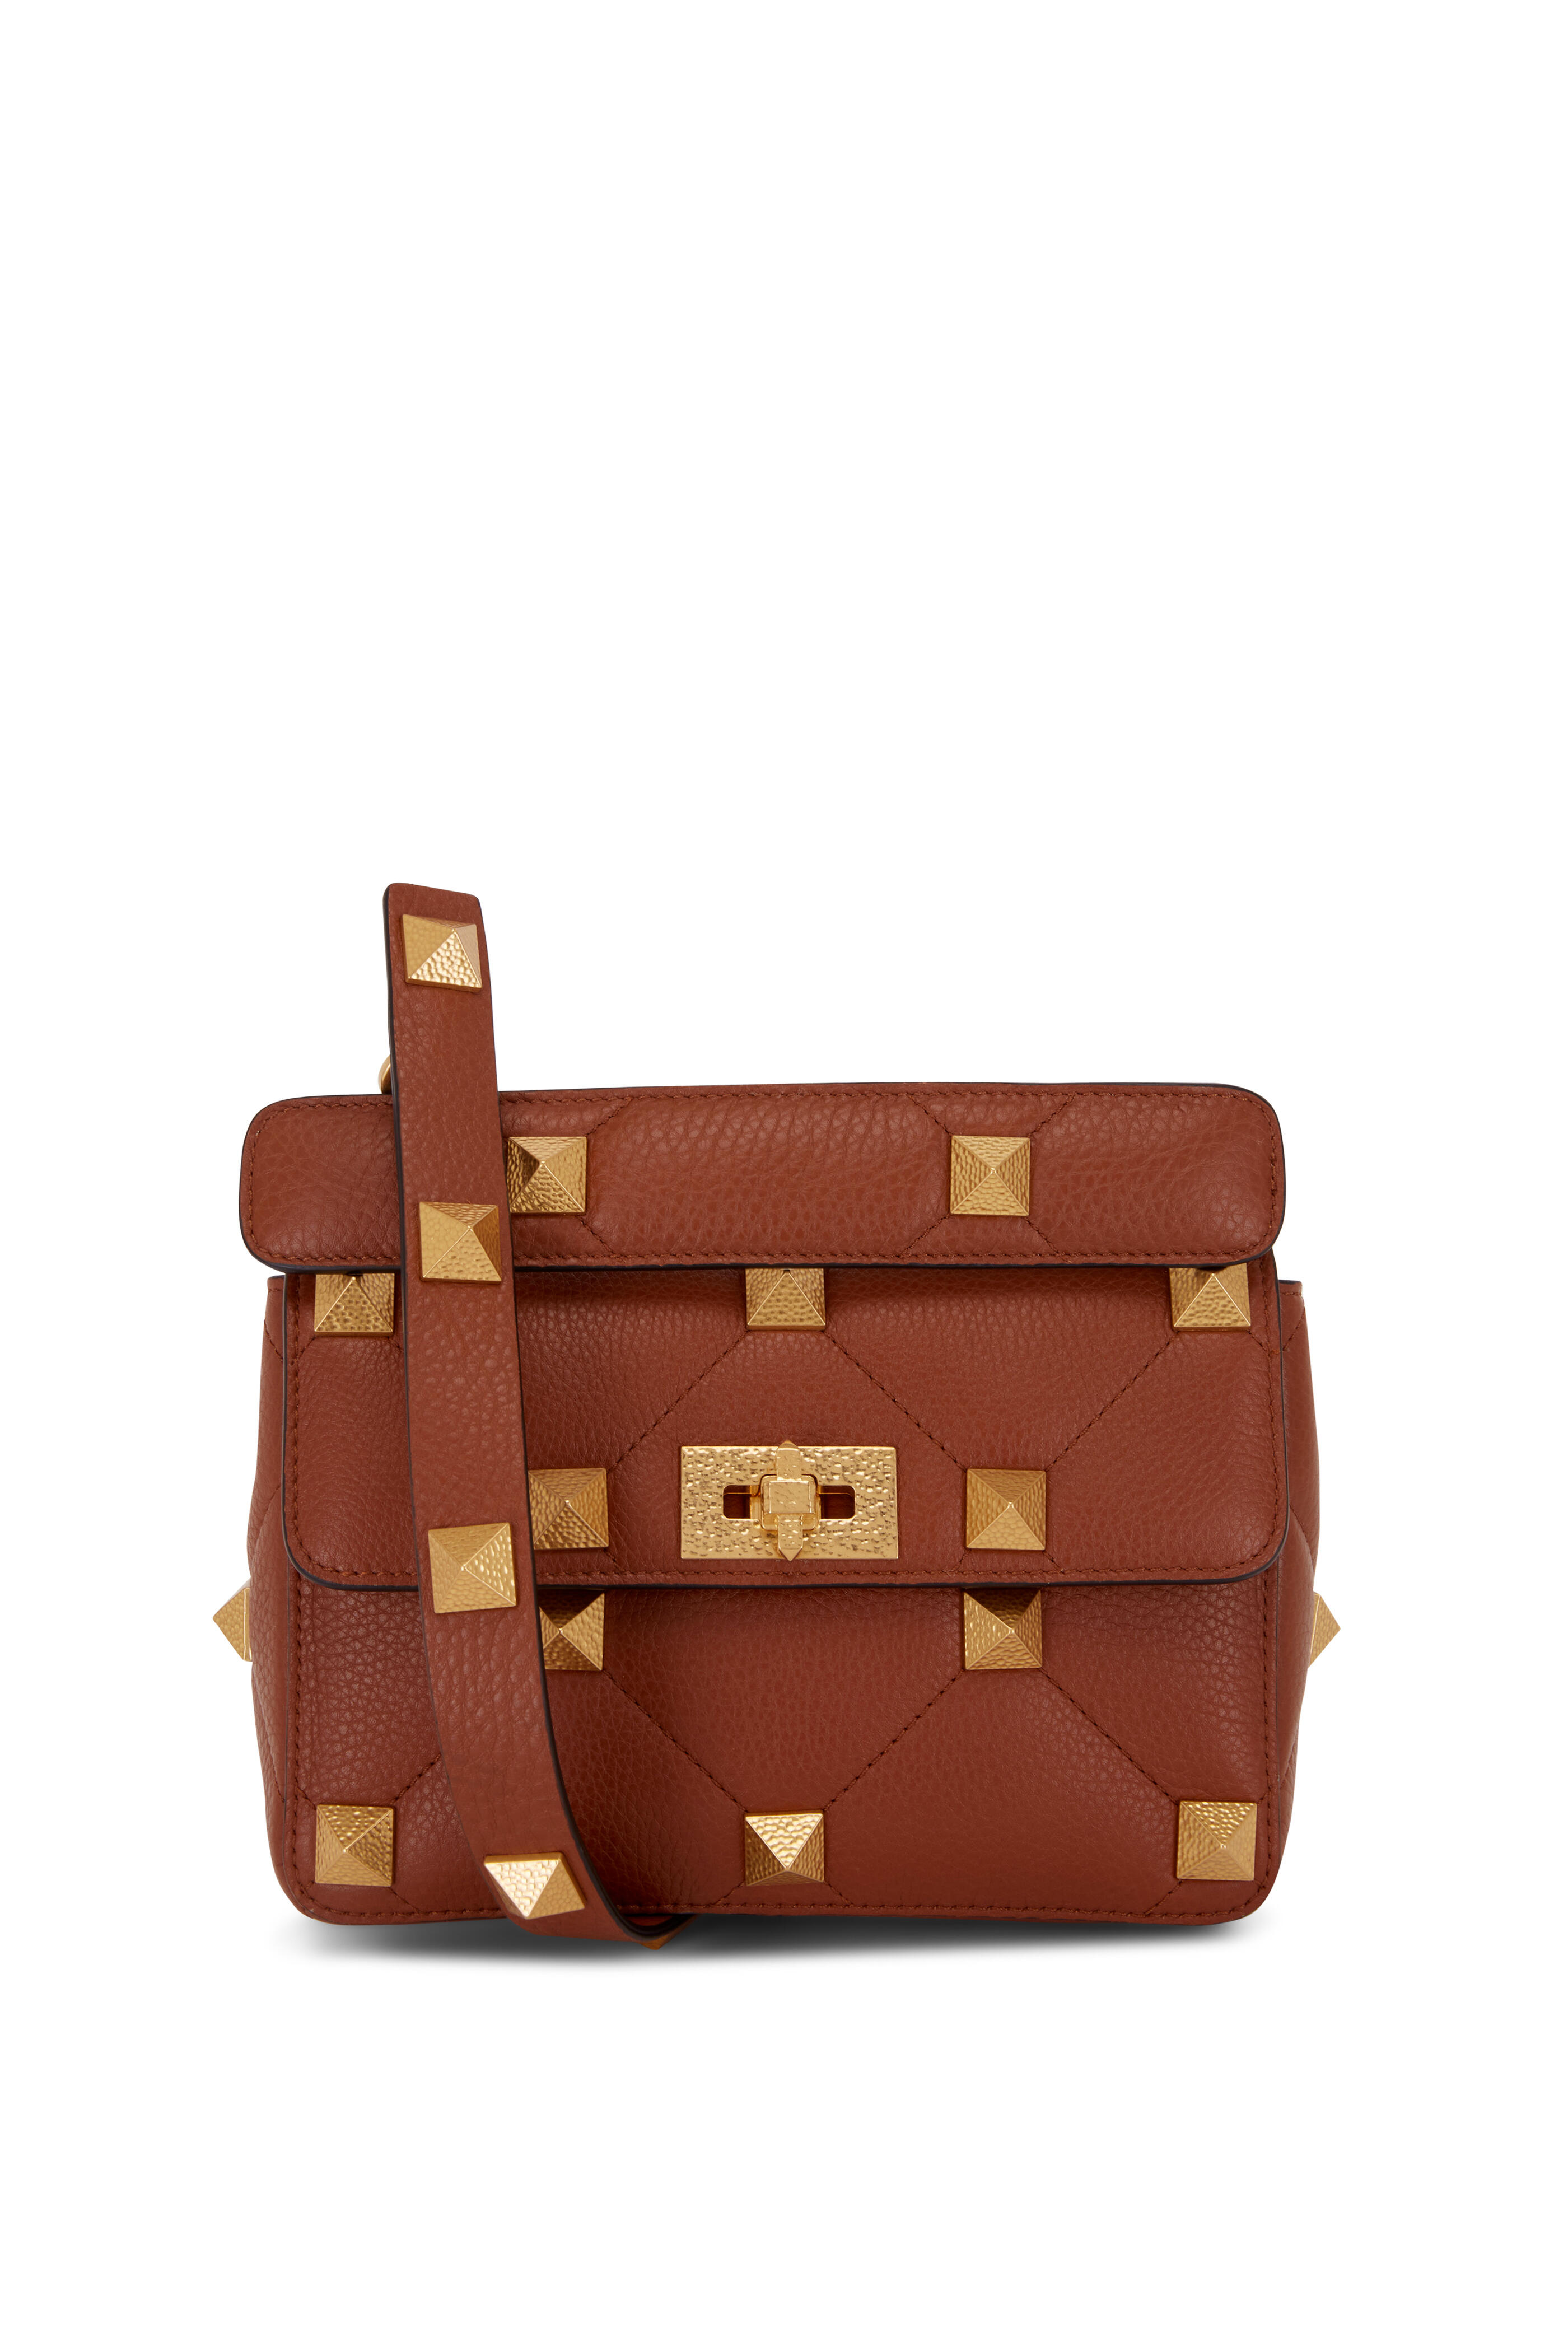 Roman Stud Medium Leather Shoulder Bag in Beige - Valentino